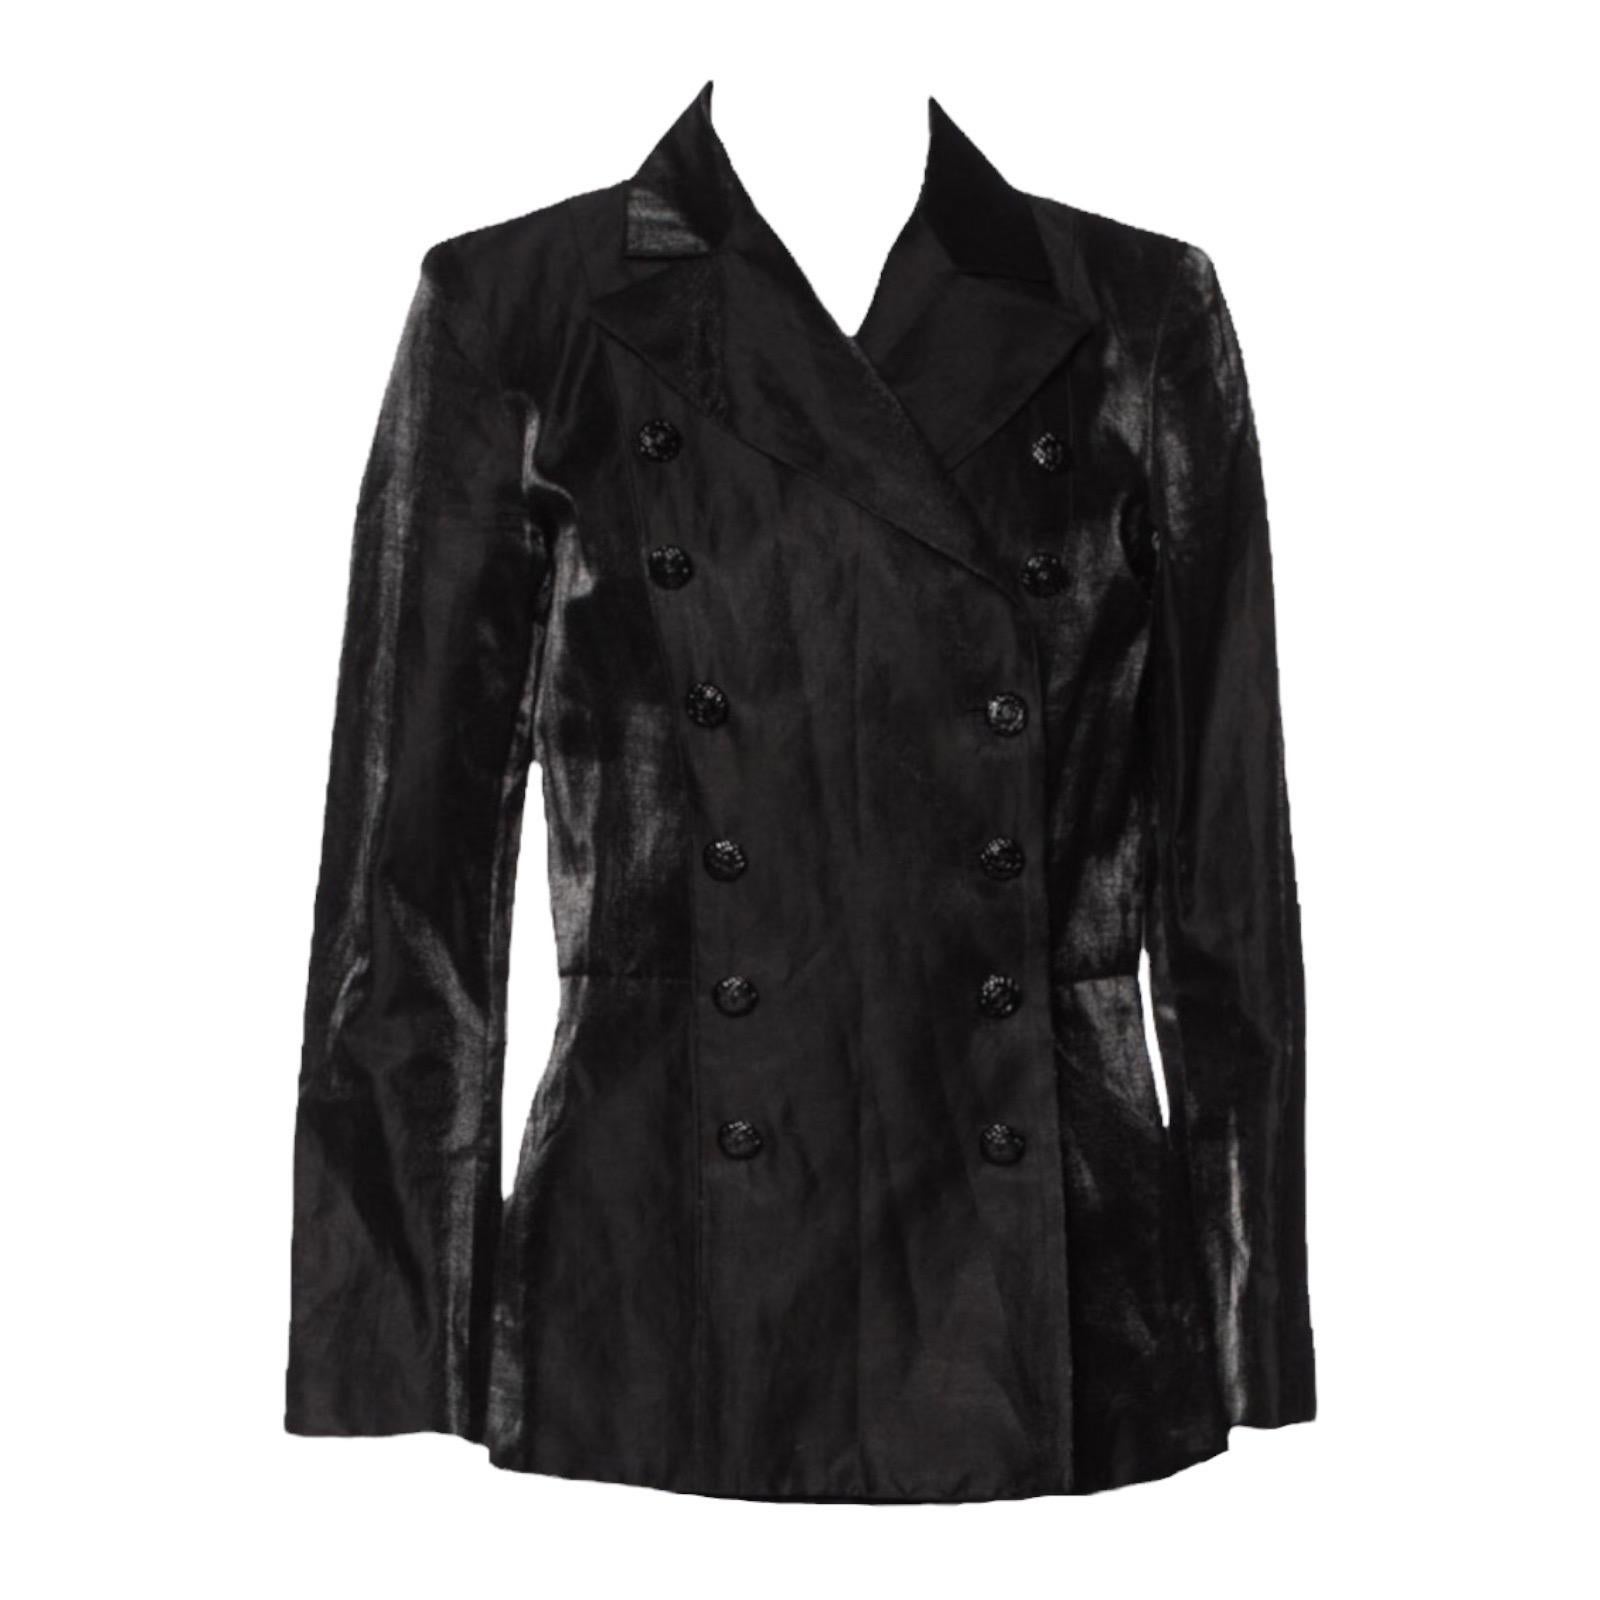 Women's CHANEL Black Shimmering Evening Festive Pants Jacket Suit Tuxedo Smoking 42-44 For Sale